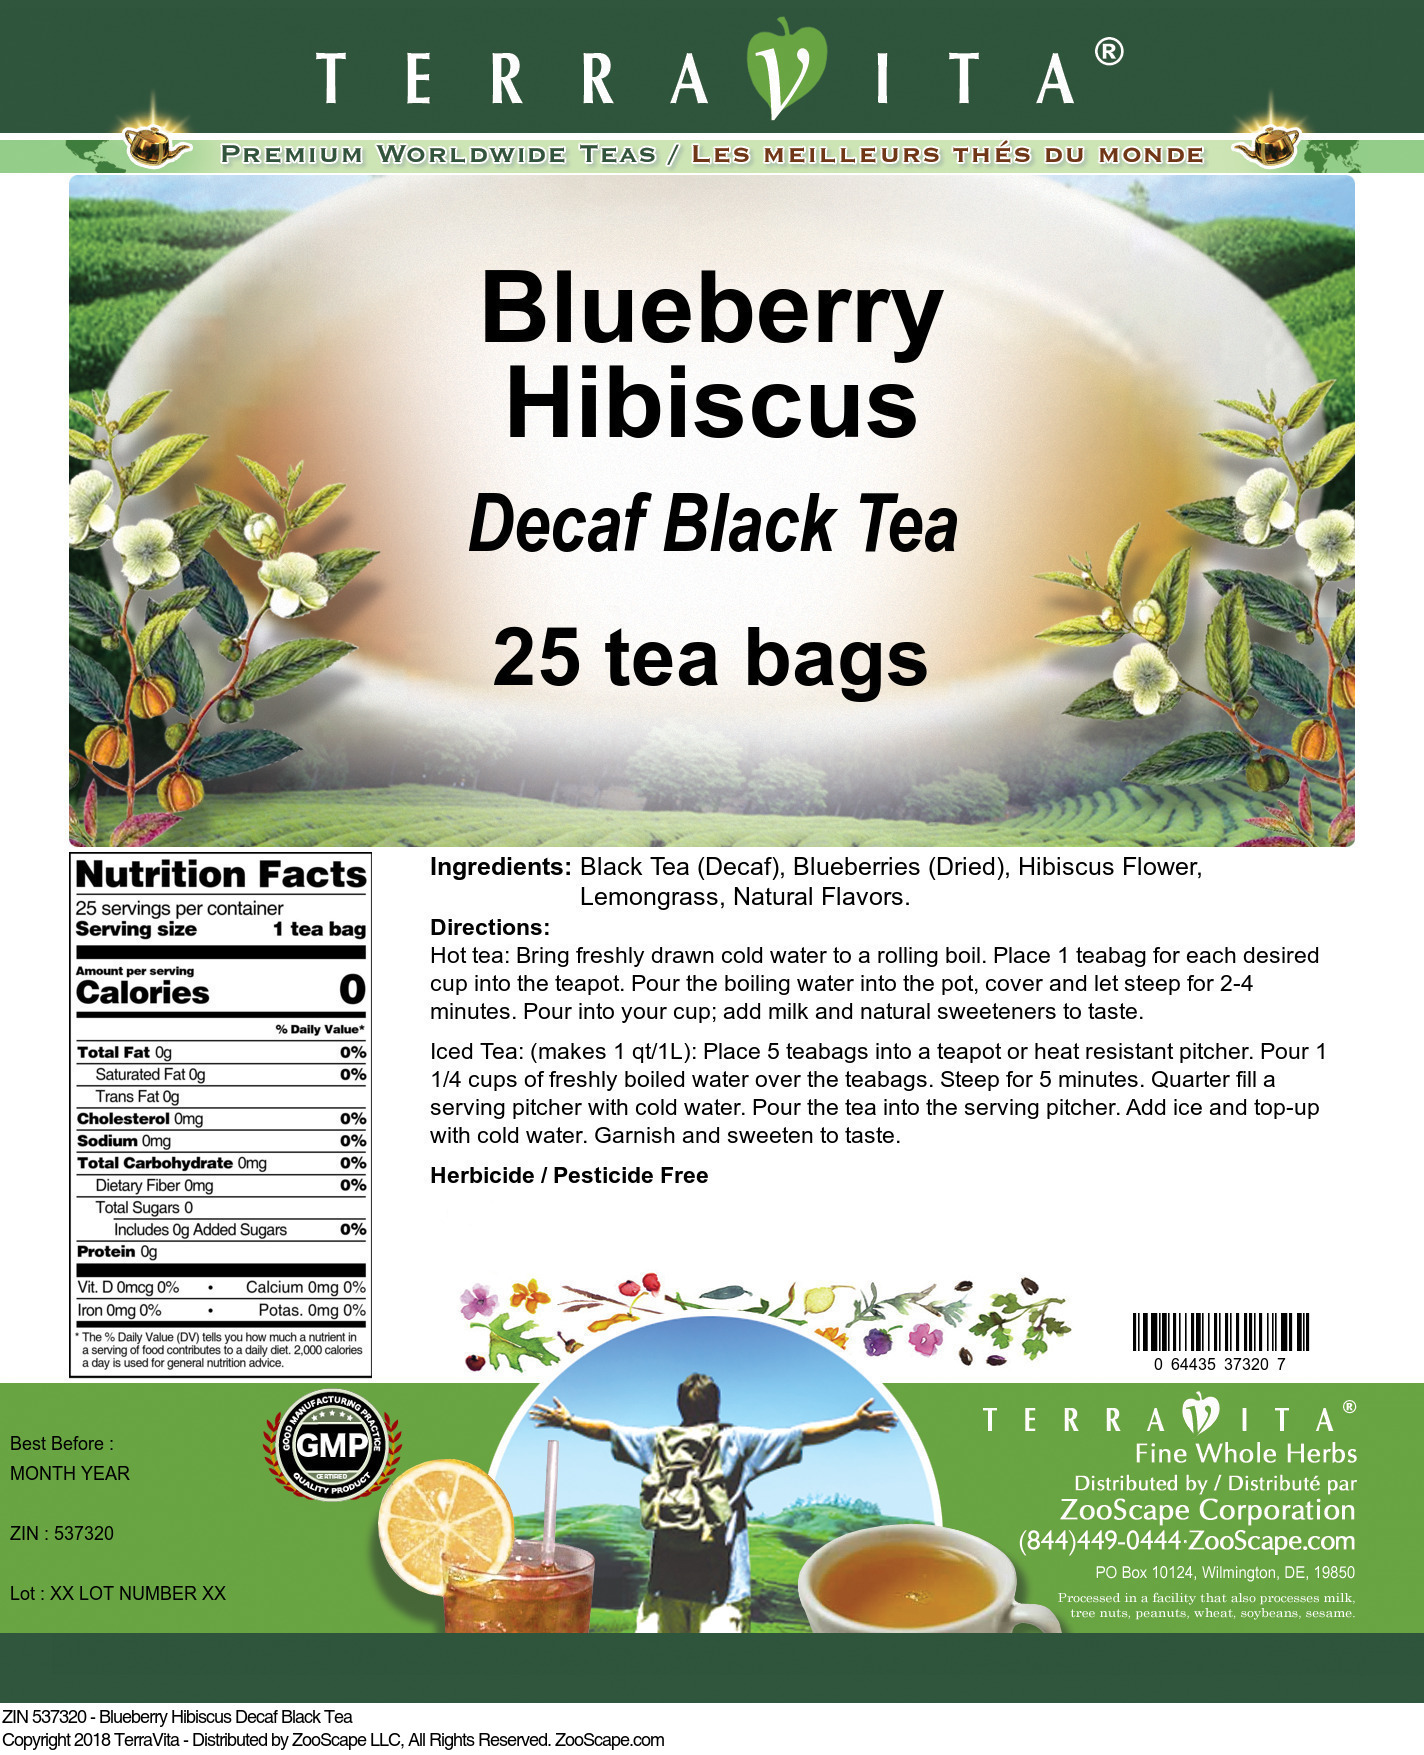 Blueberry Hibiscus Decaf Black Tea - Label